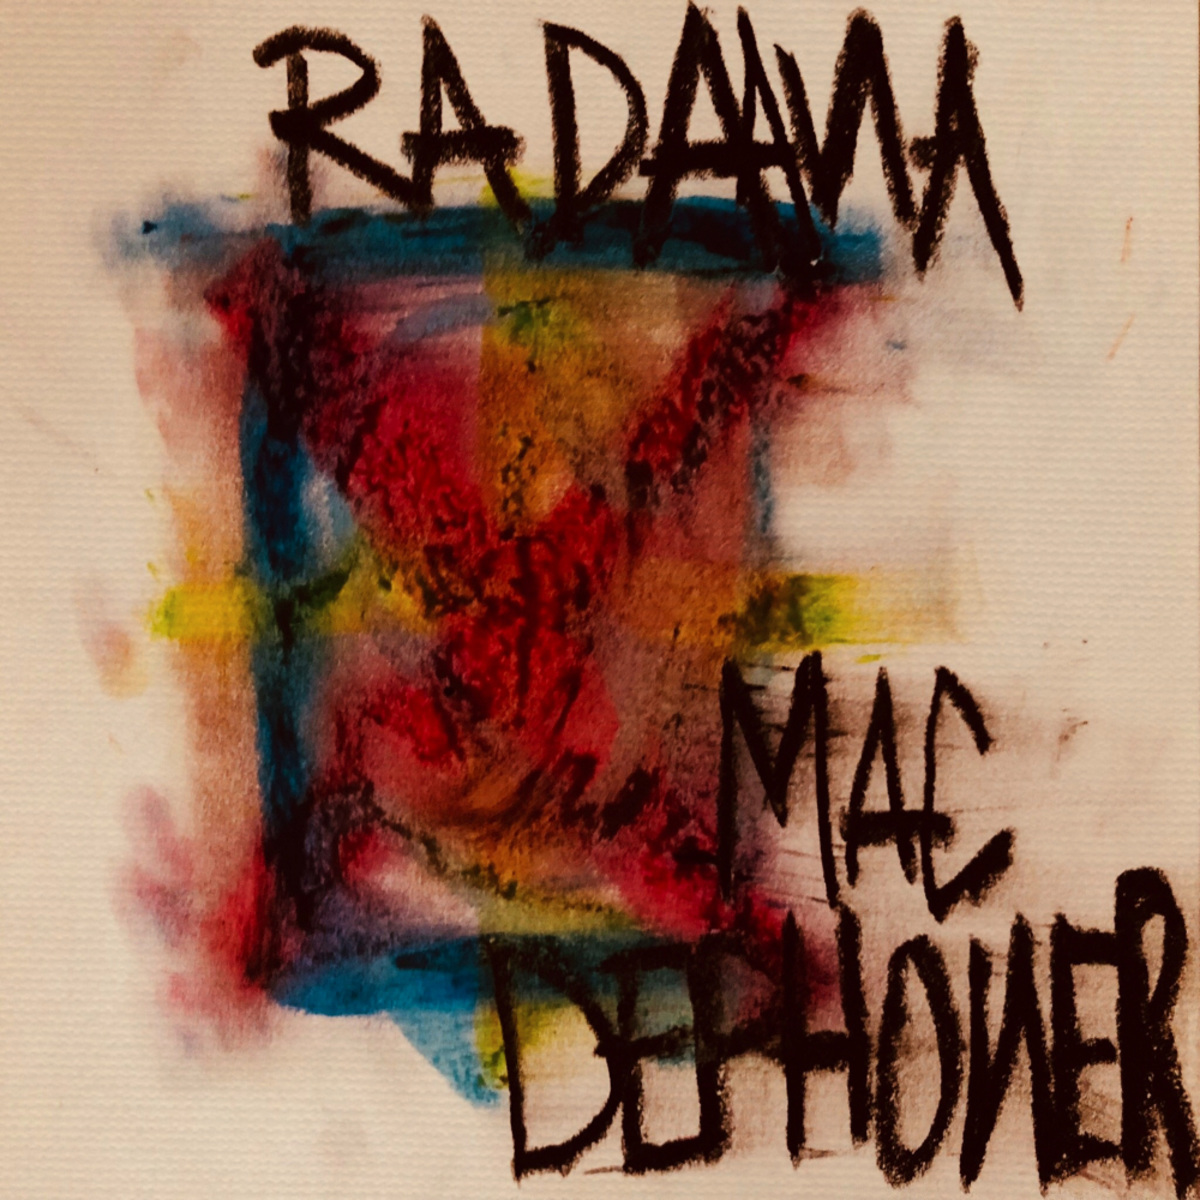 Mac Dephoner - Radaana / Visile Records